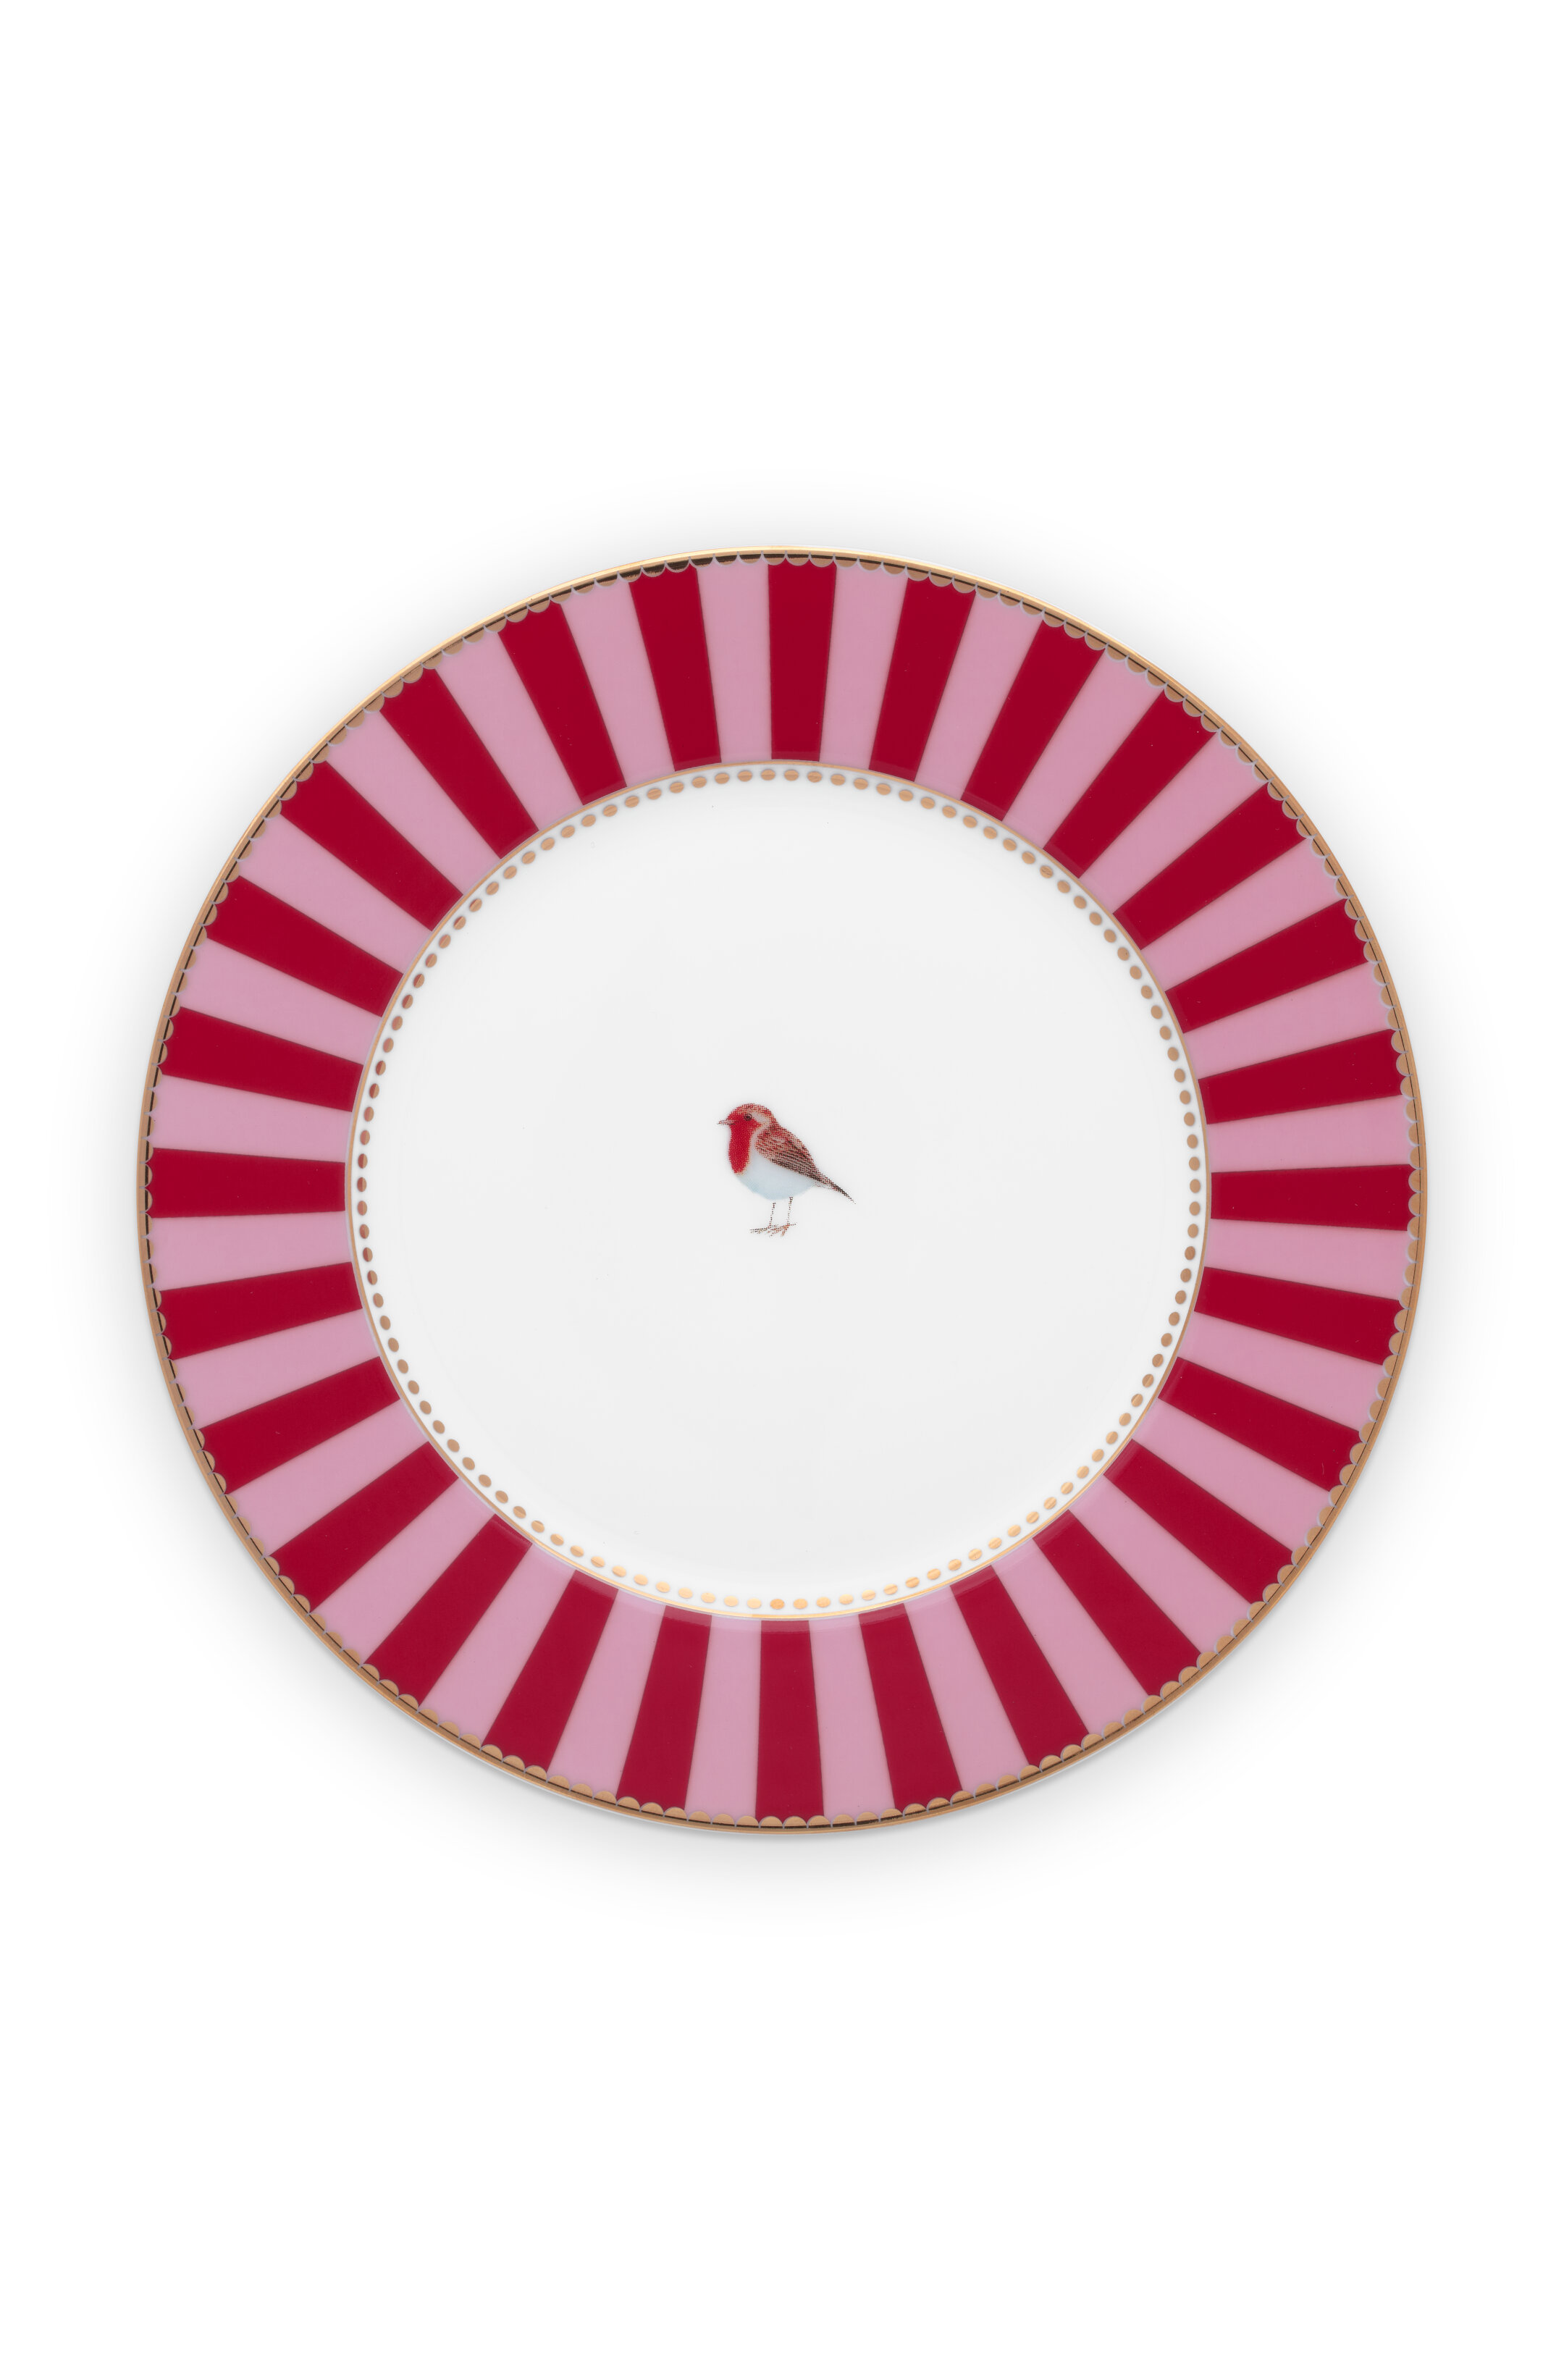 Pip Studio Love Birds Plate Stripes Red-Pink (17cm)